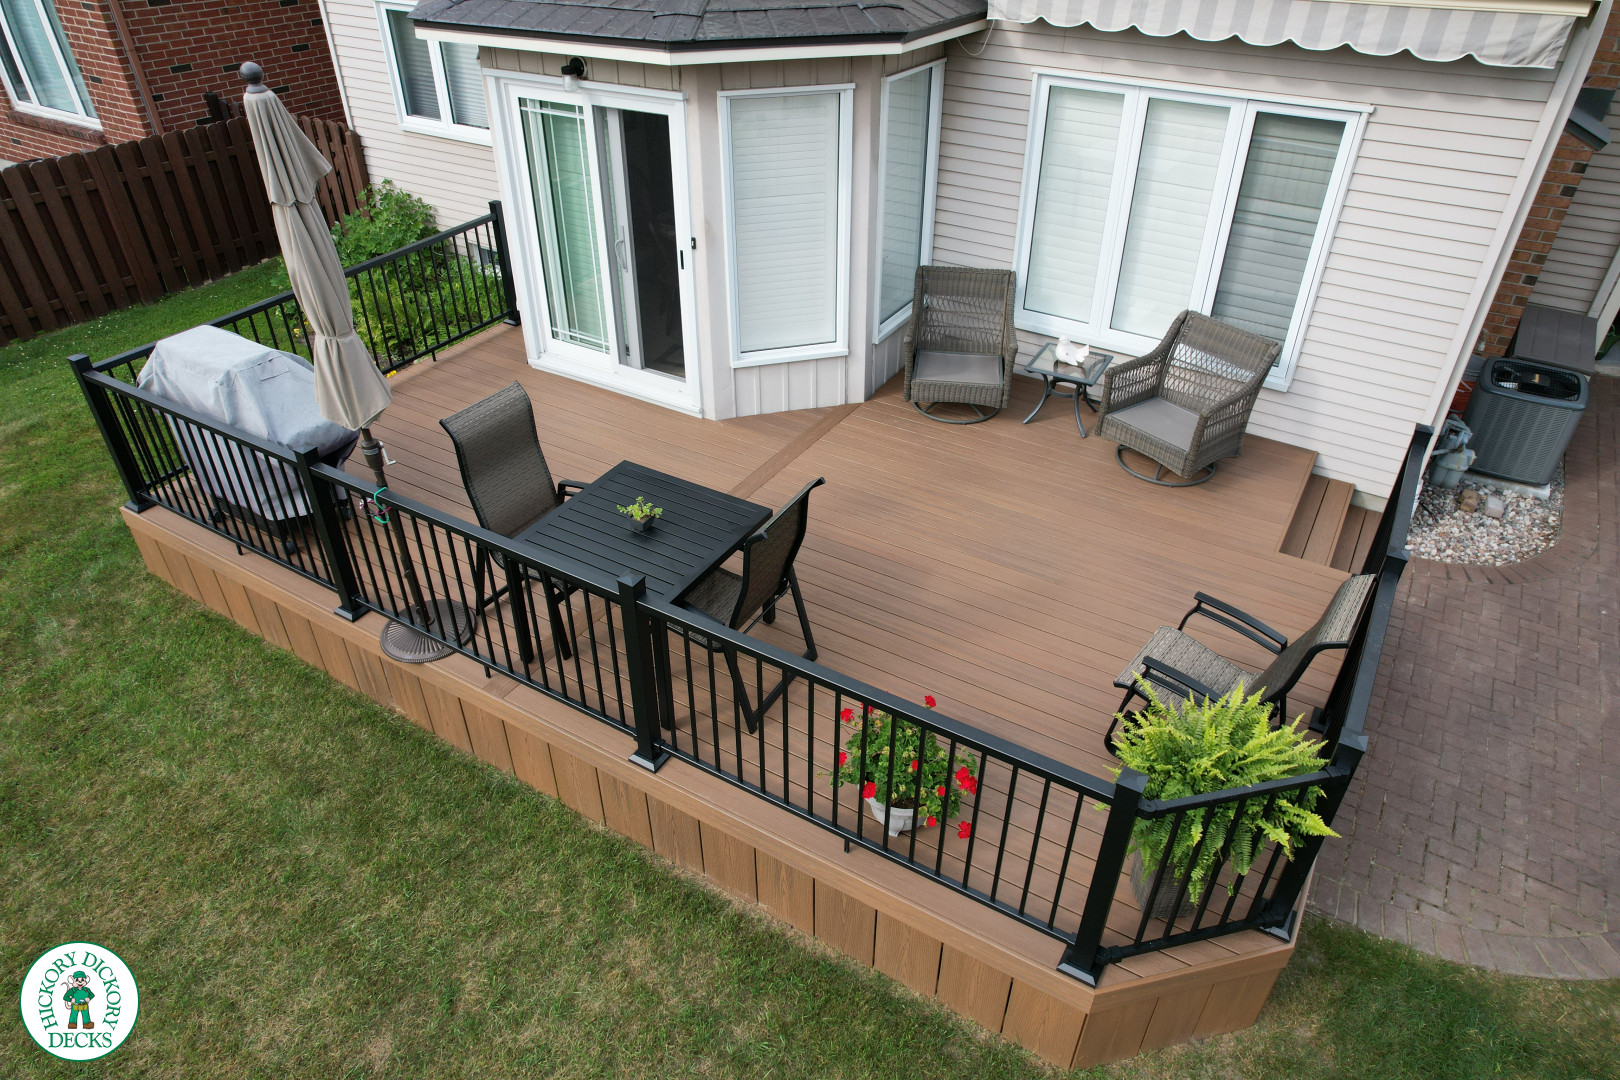 LArge brown fiberon deck with black aluminum railings.